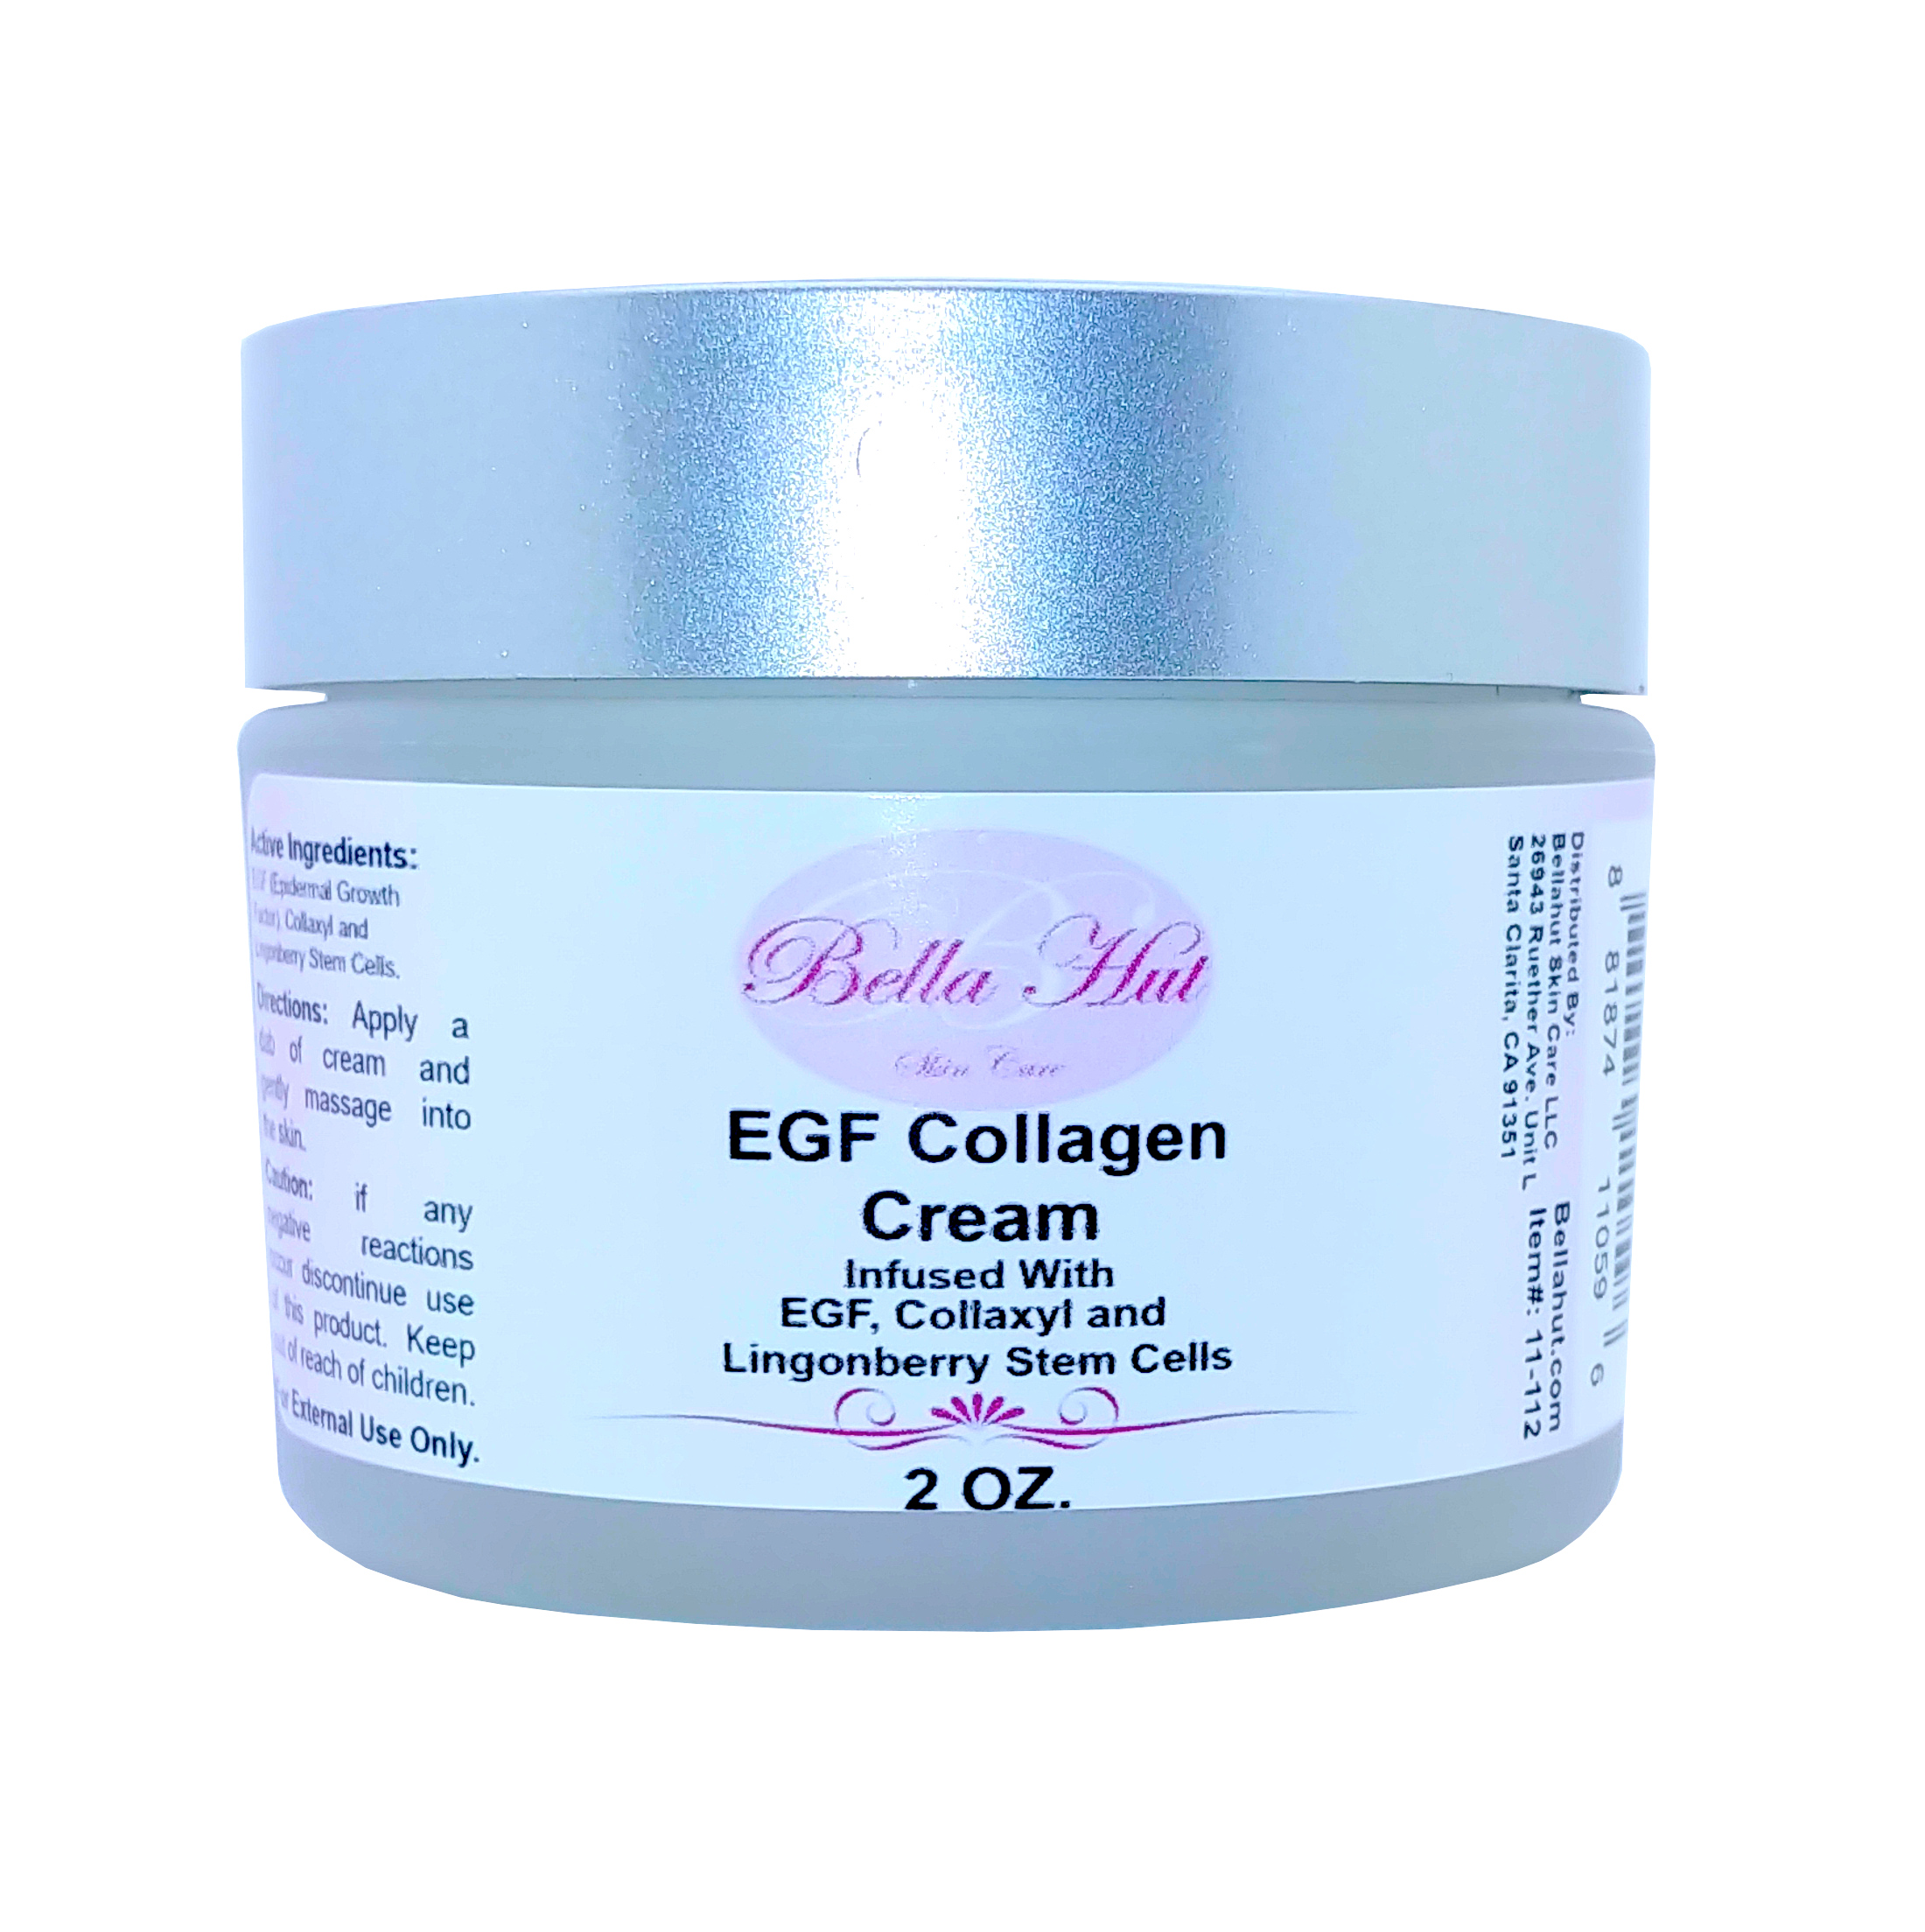 Bellahut's EGF Collagen Cream with Collaxyl, EGF and Lingostem Stem Cells Active Peptides